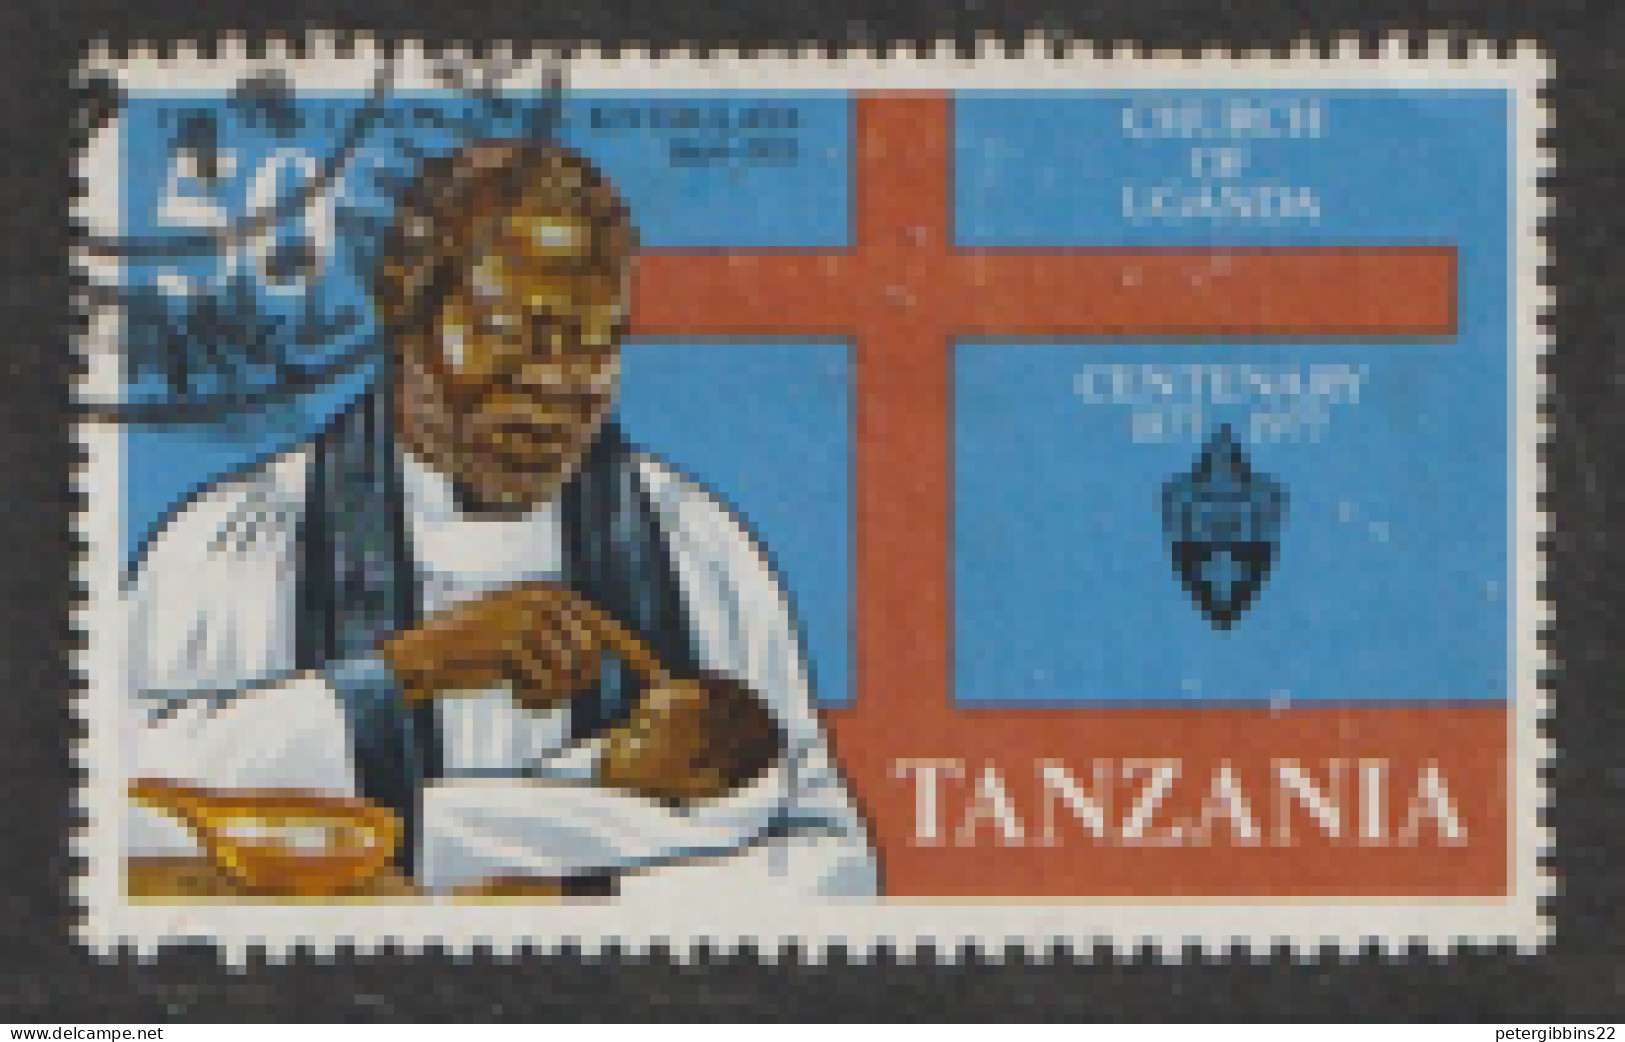 Tanzania   1977   SG 207  50c   Church Centenary  Fine Used - Tanzanie (1964-...)